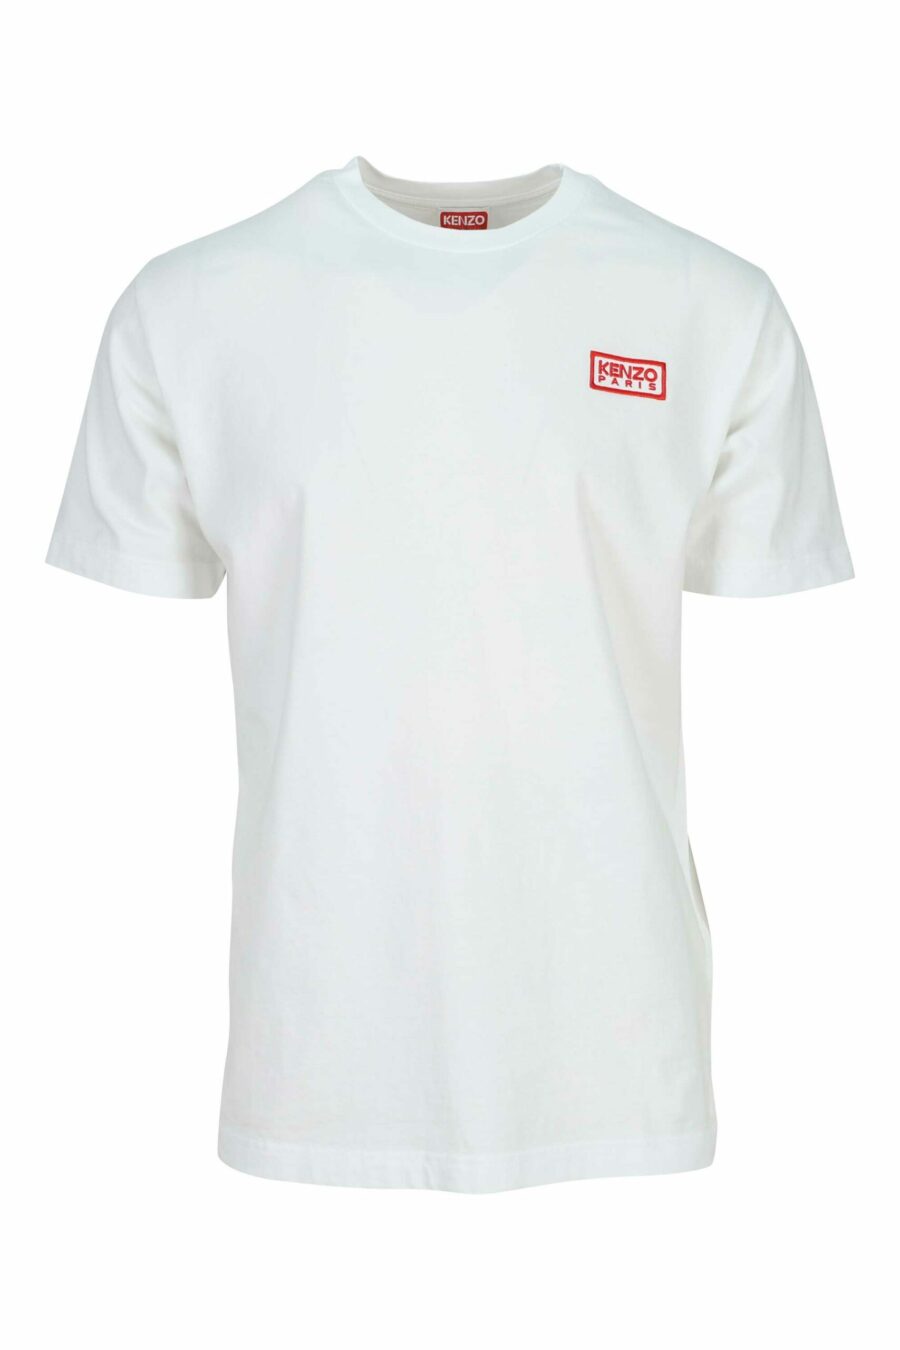 T-shirt branca com minilogo "KP classic" - 3612230624641 scaled